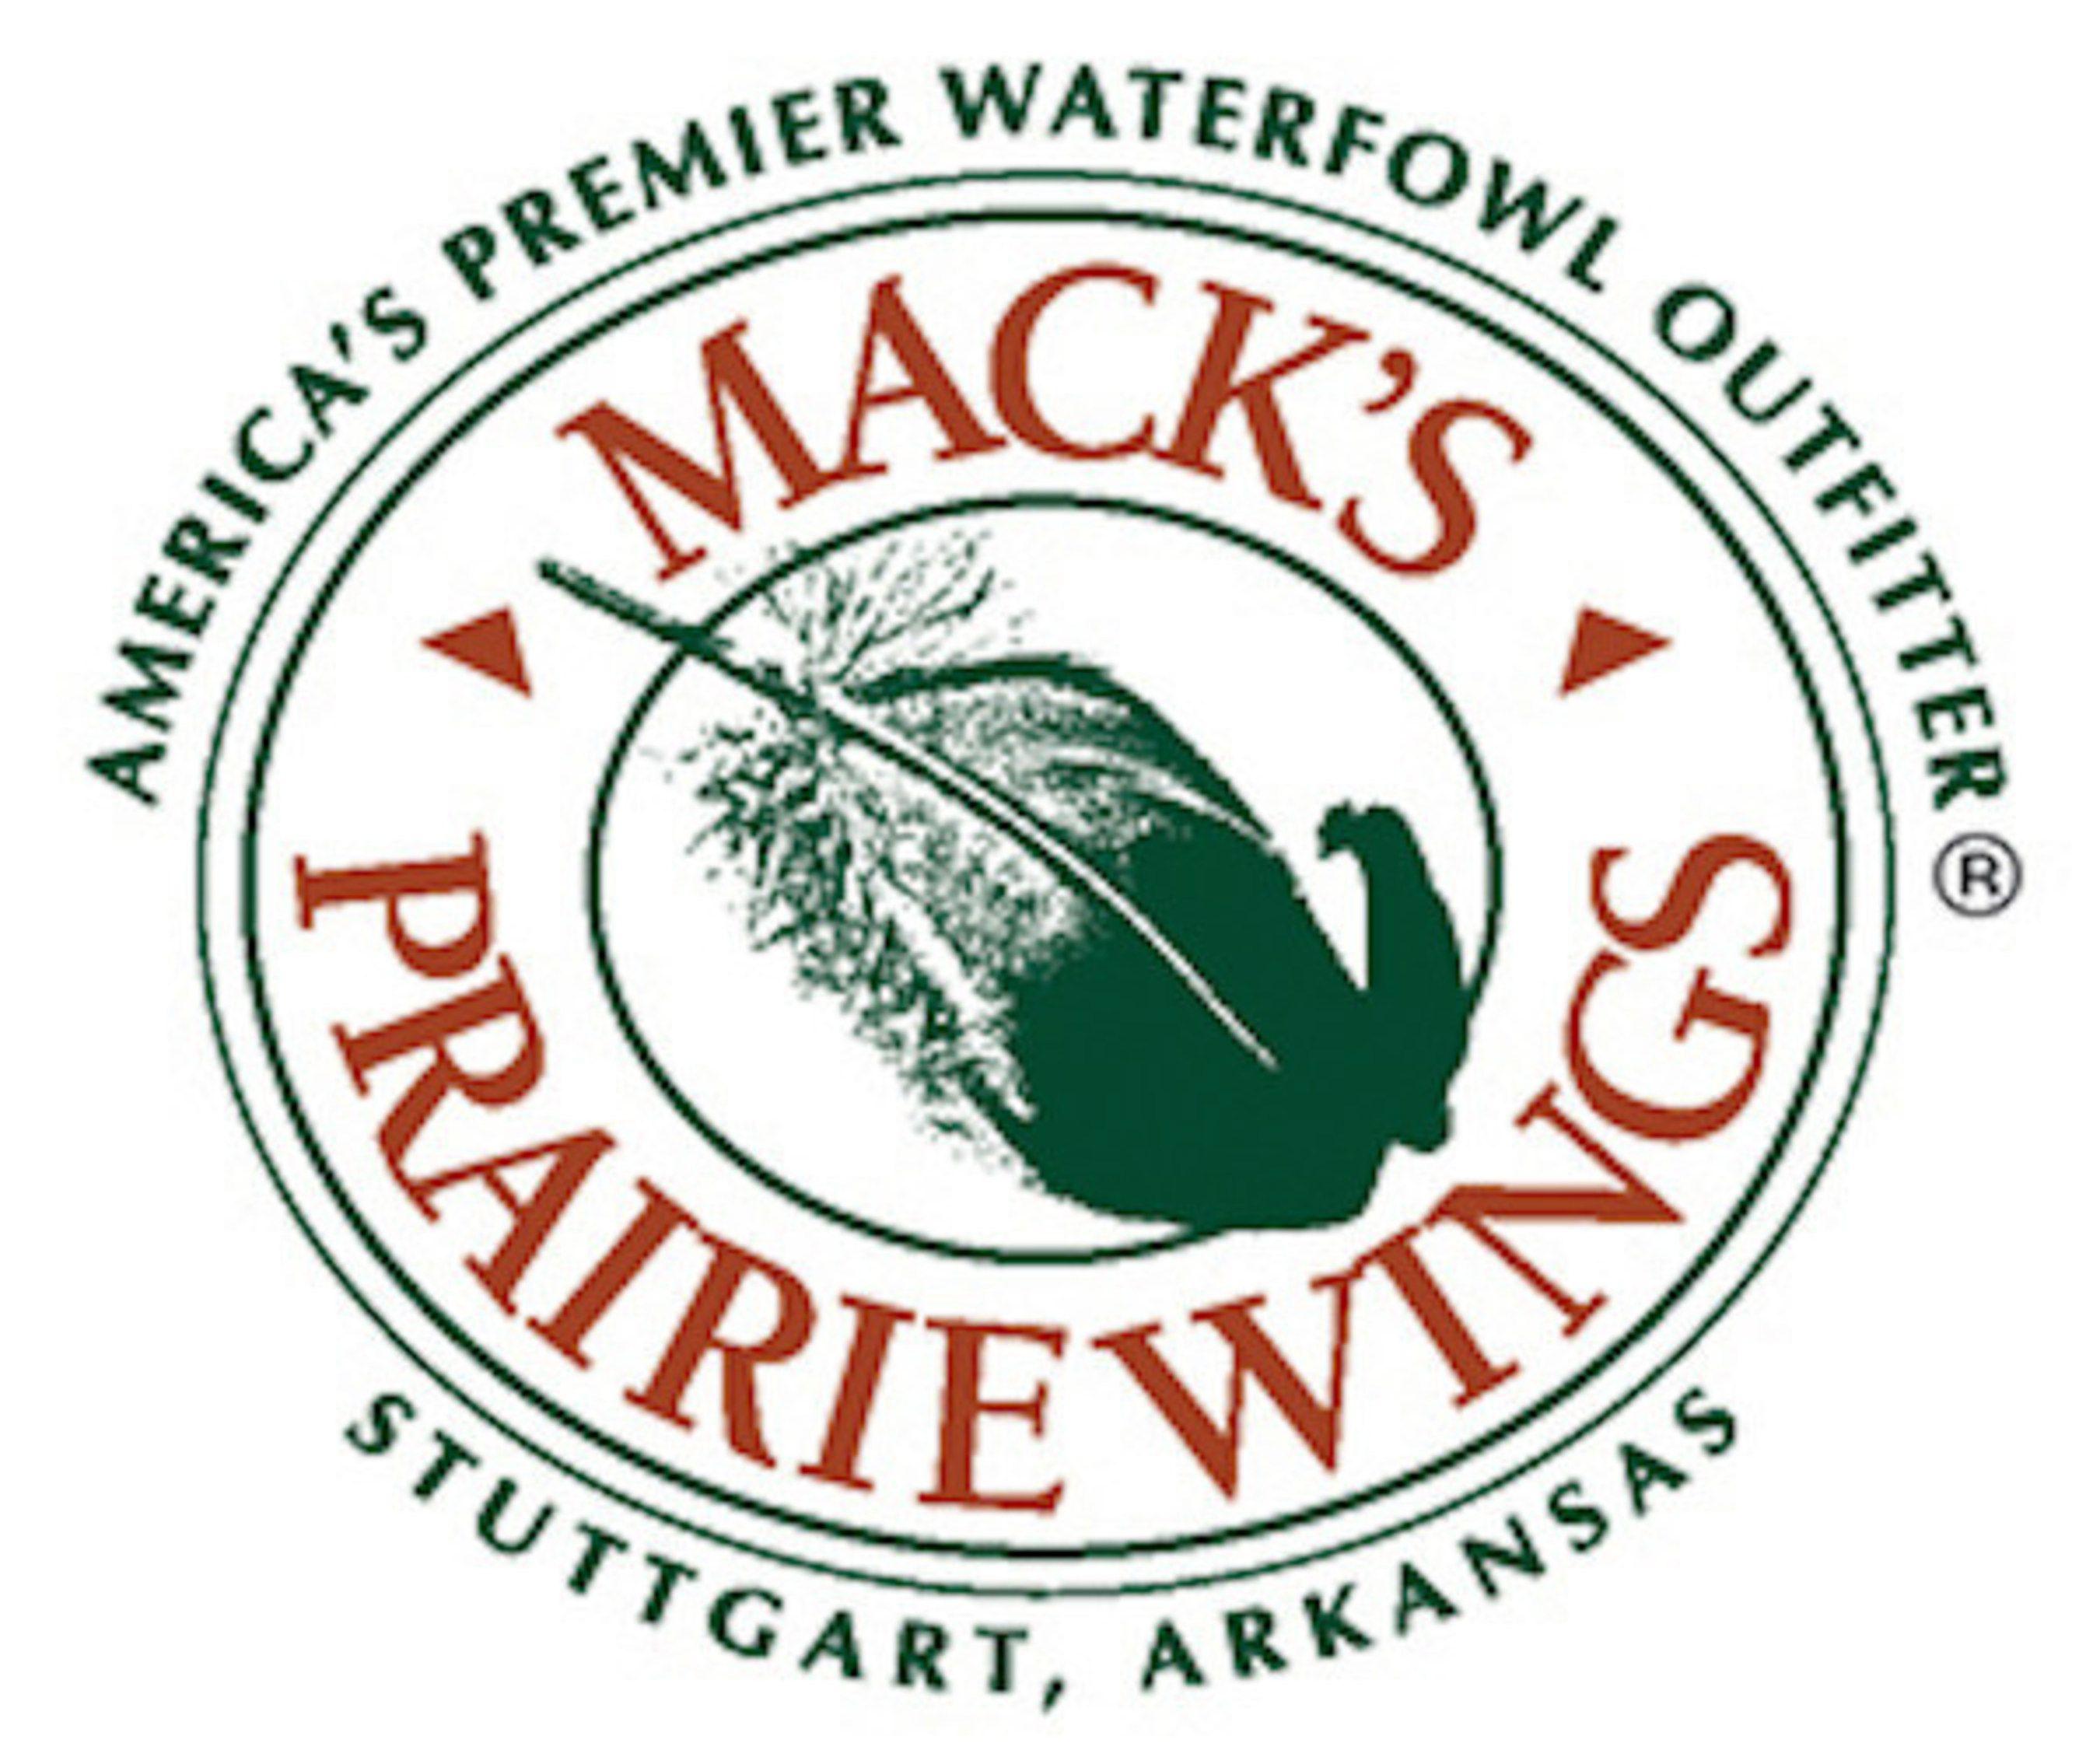 Mack's Logo - SG-20 Wader Repair Kit Now Available at Mack's Prairie Wings